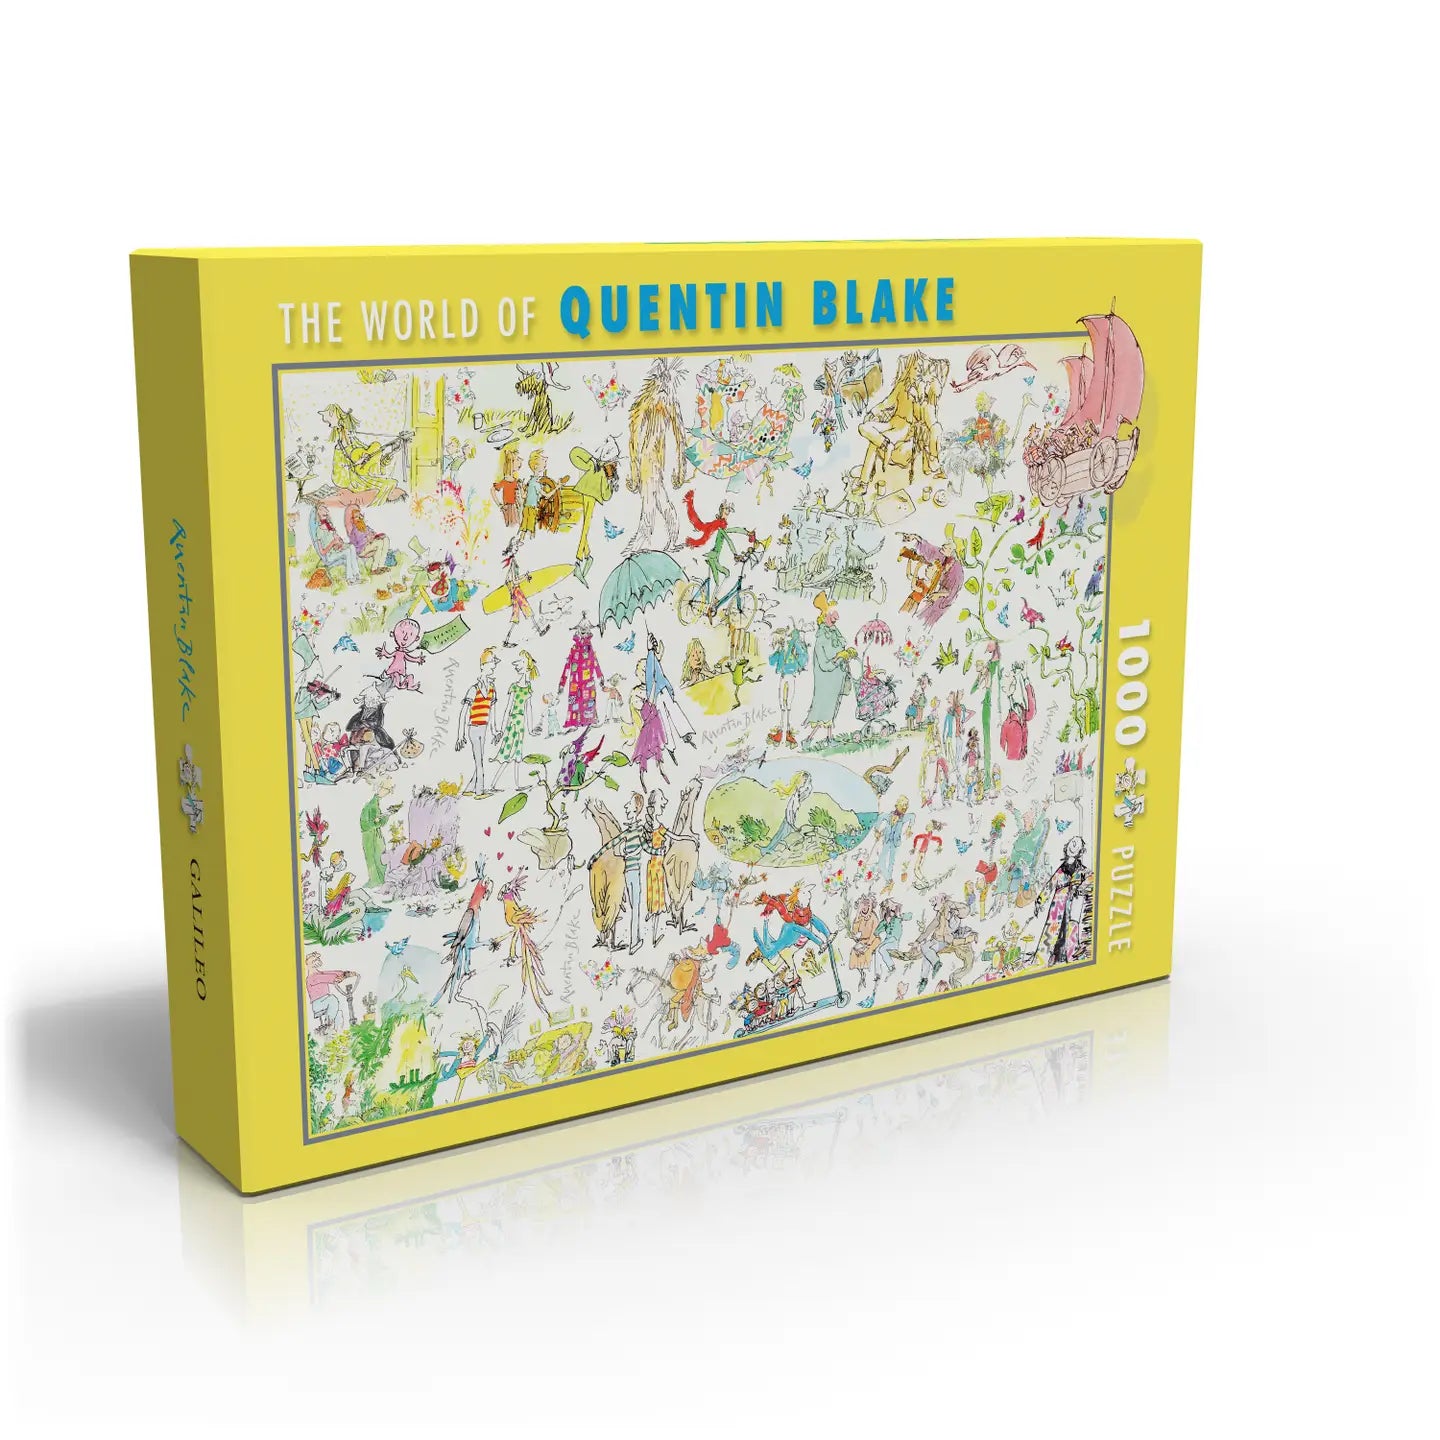 The World of Quentin Blake: 1000 Piece Jigsaw